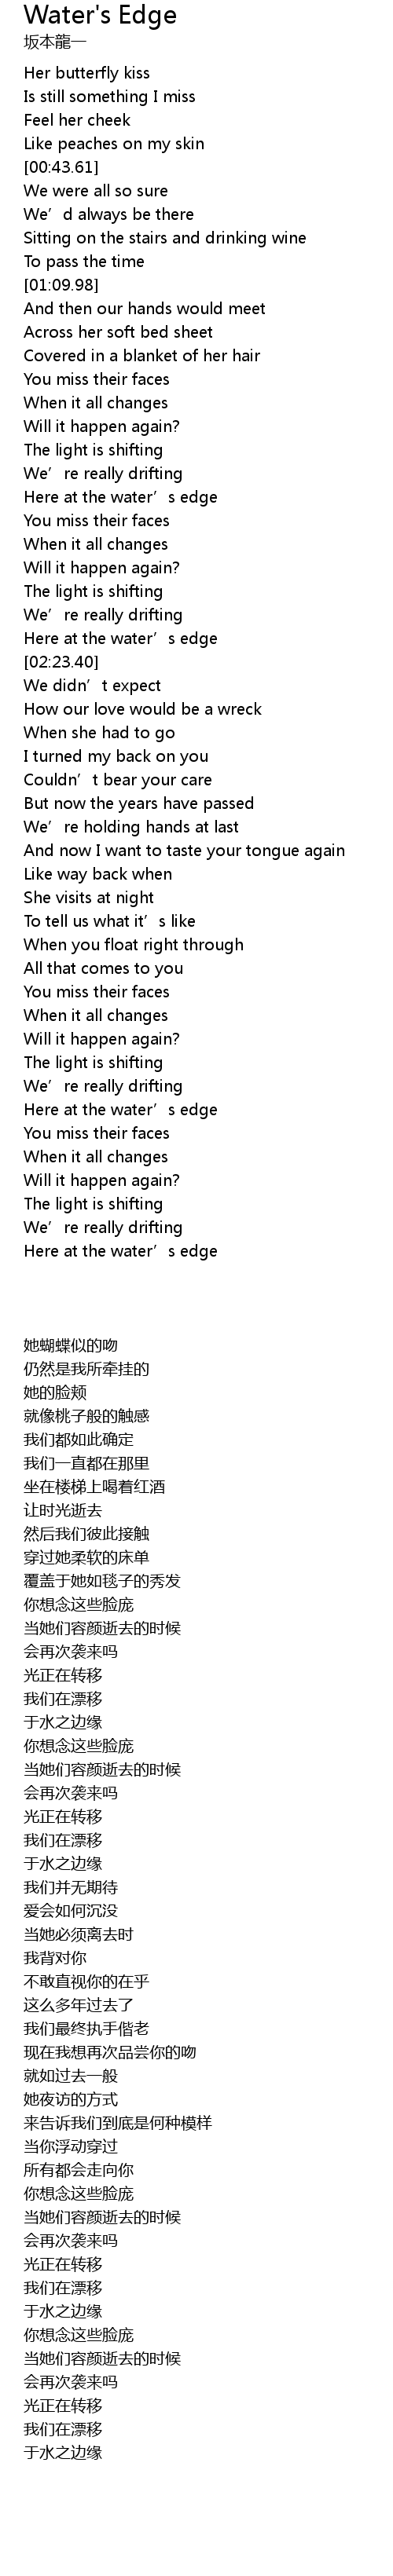 Water's Edge Lyrics - Follow Lyrics